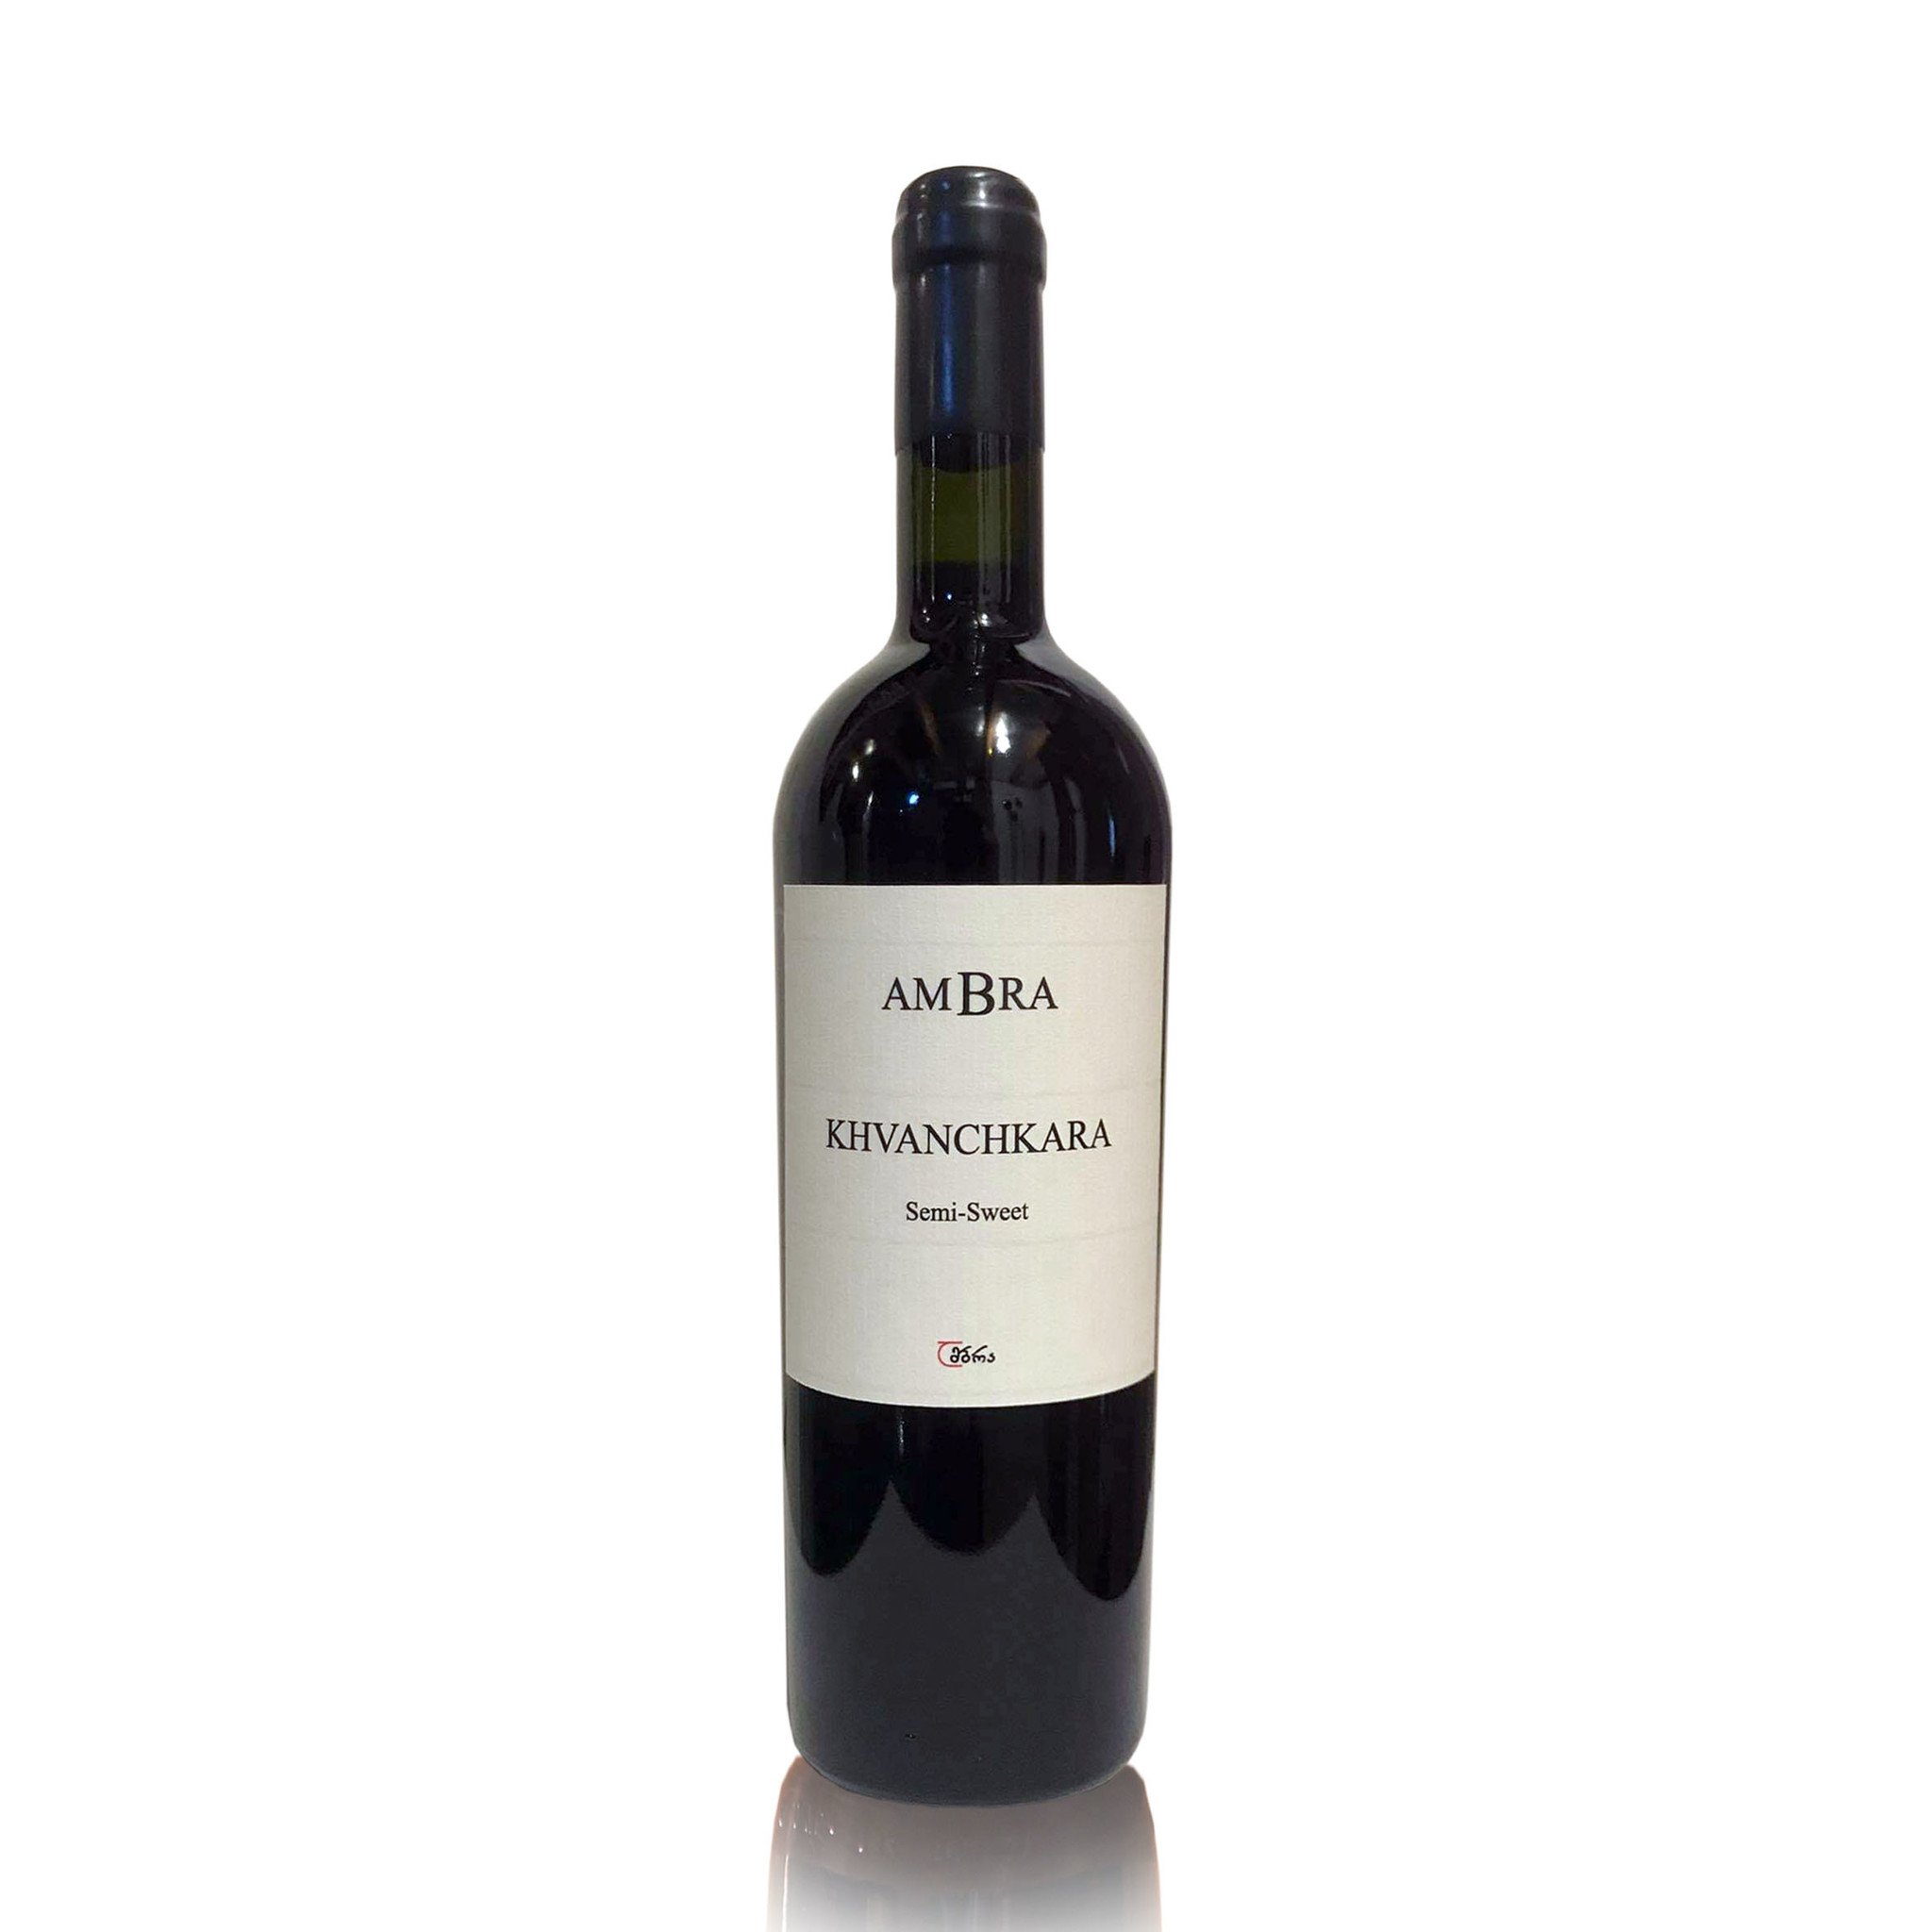 AMBRA Khvanchkara AMBRA Semi-Sweet red wine 2020